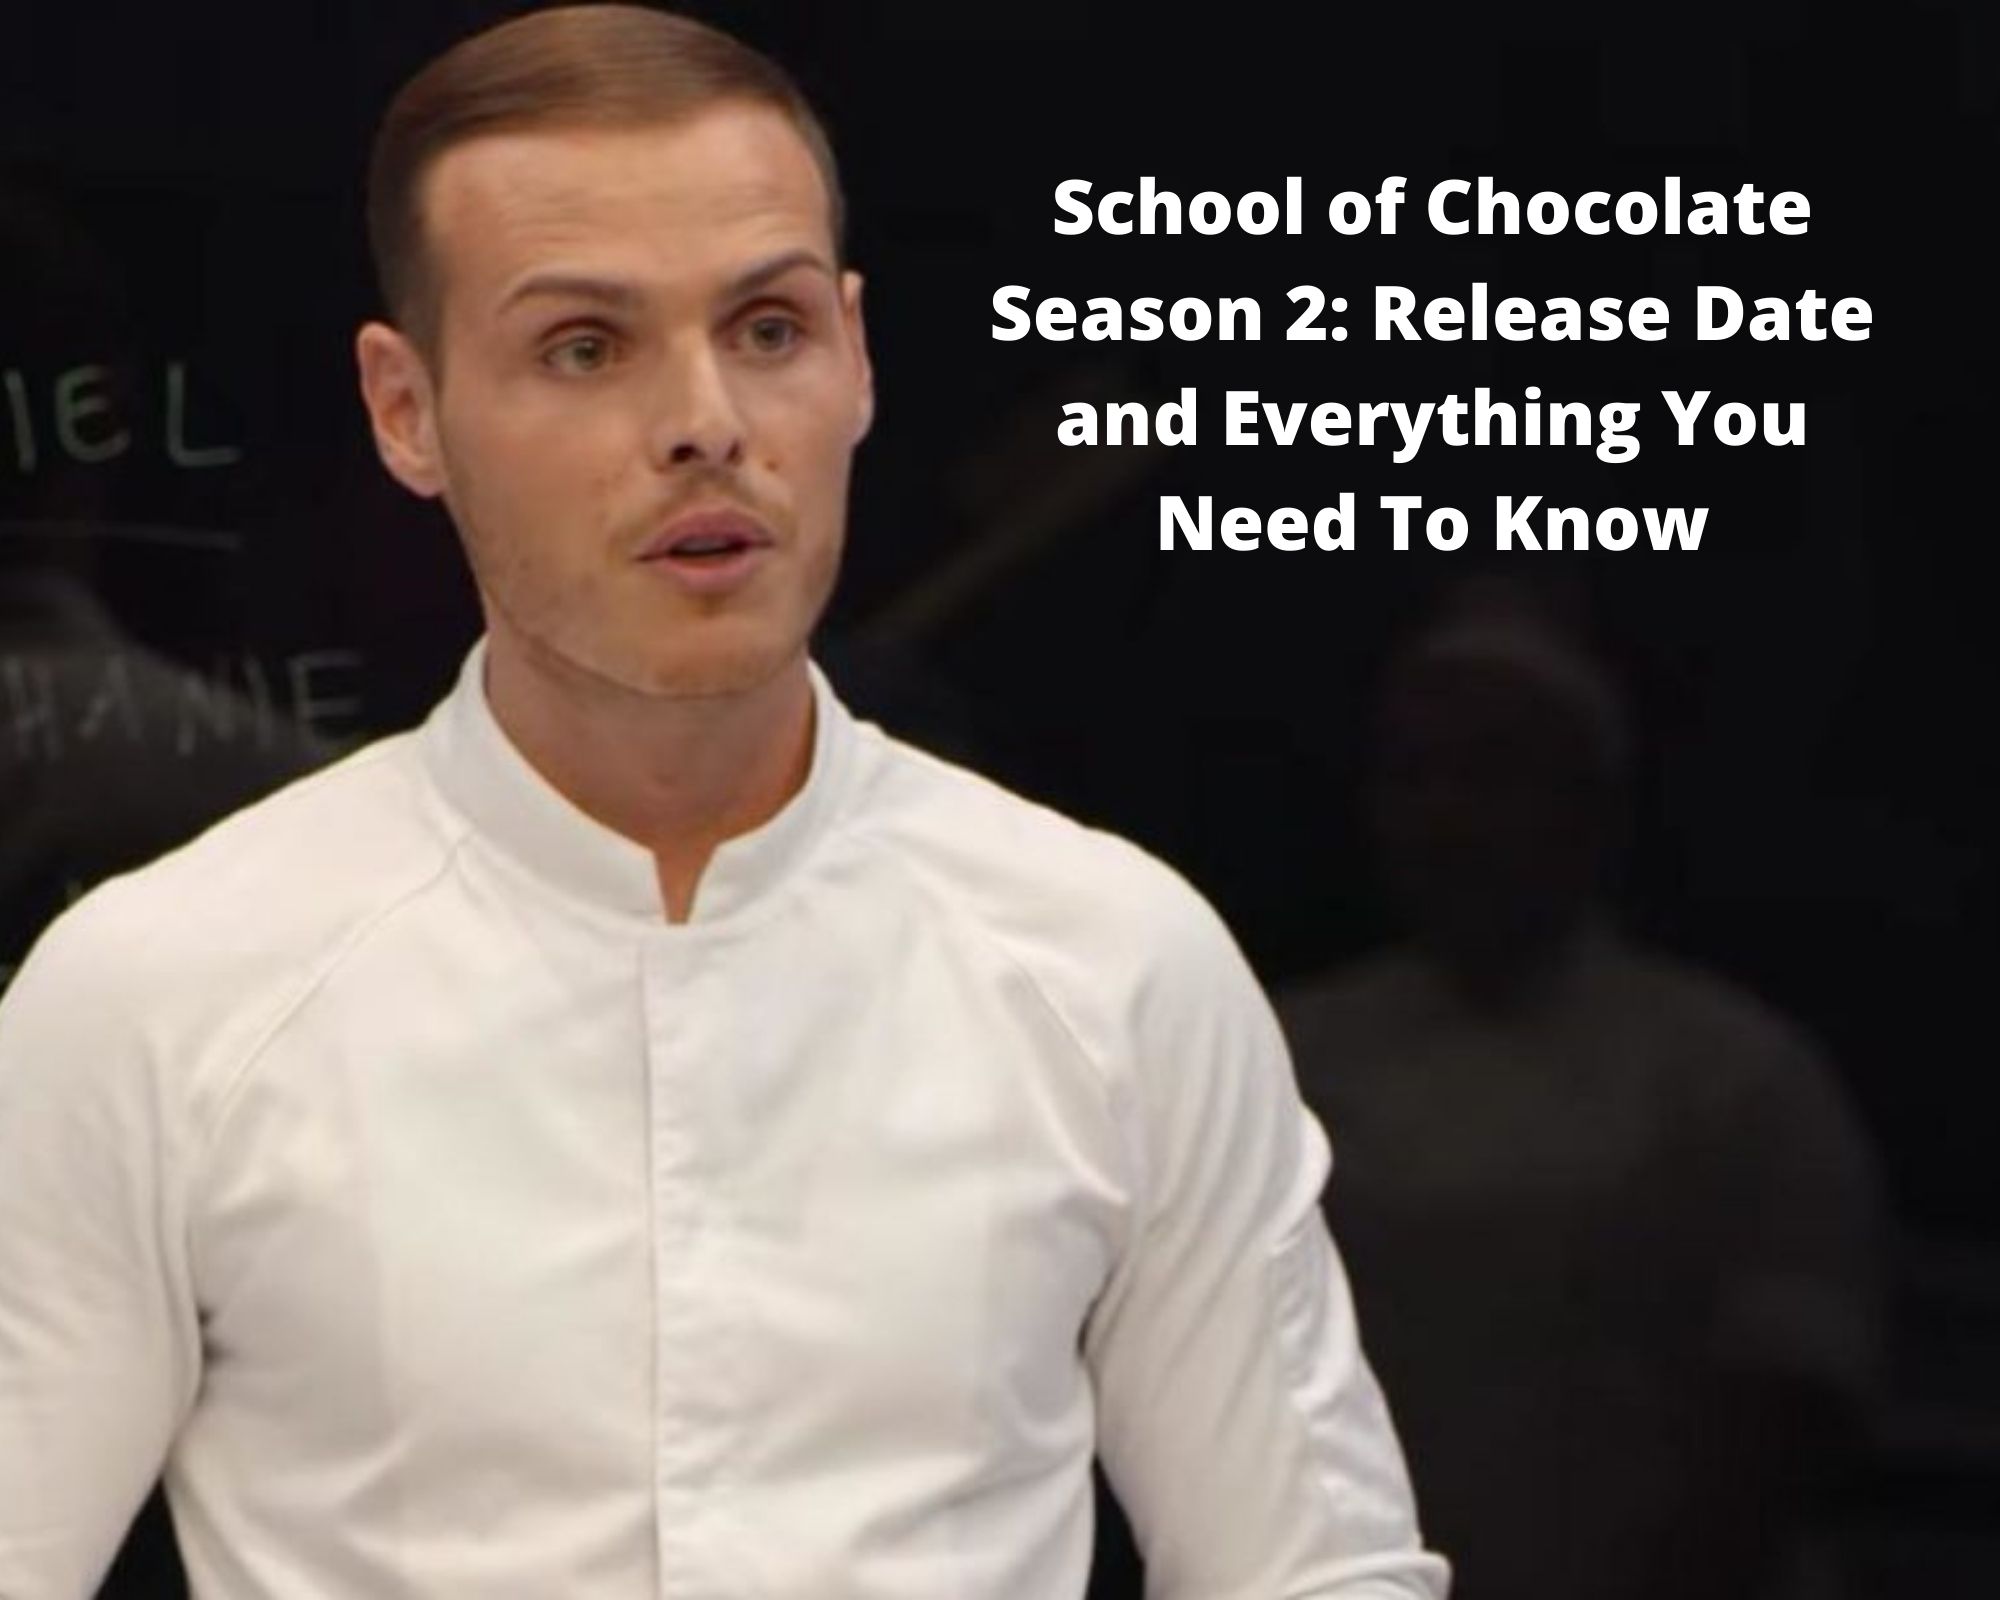 School of Chocolate Season 2